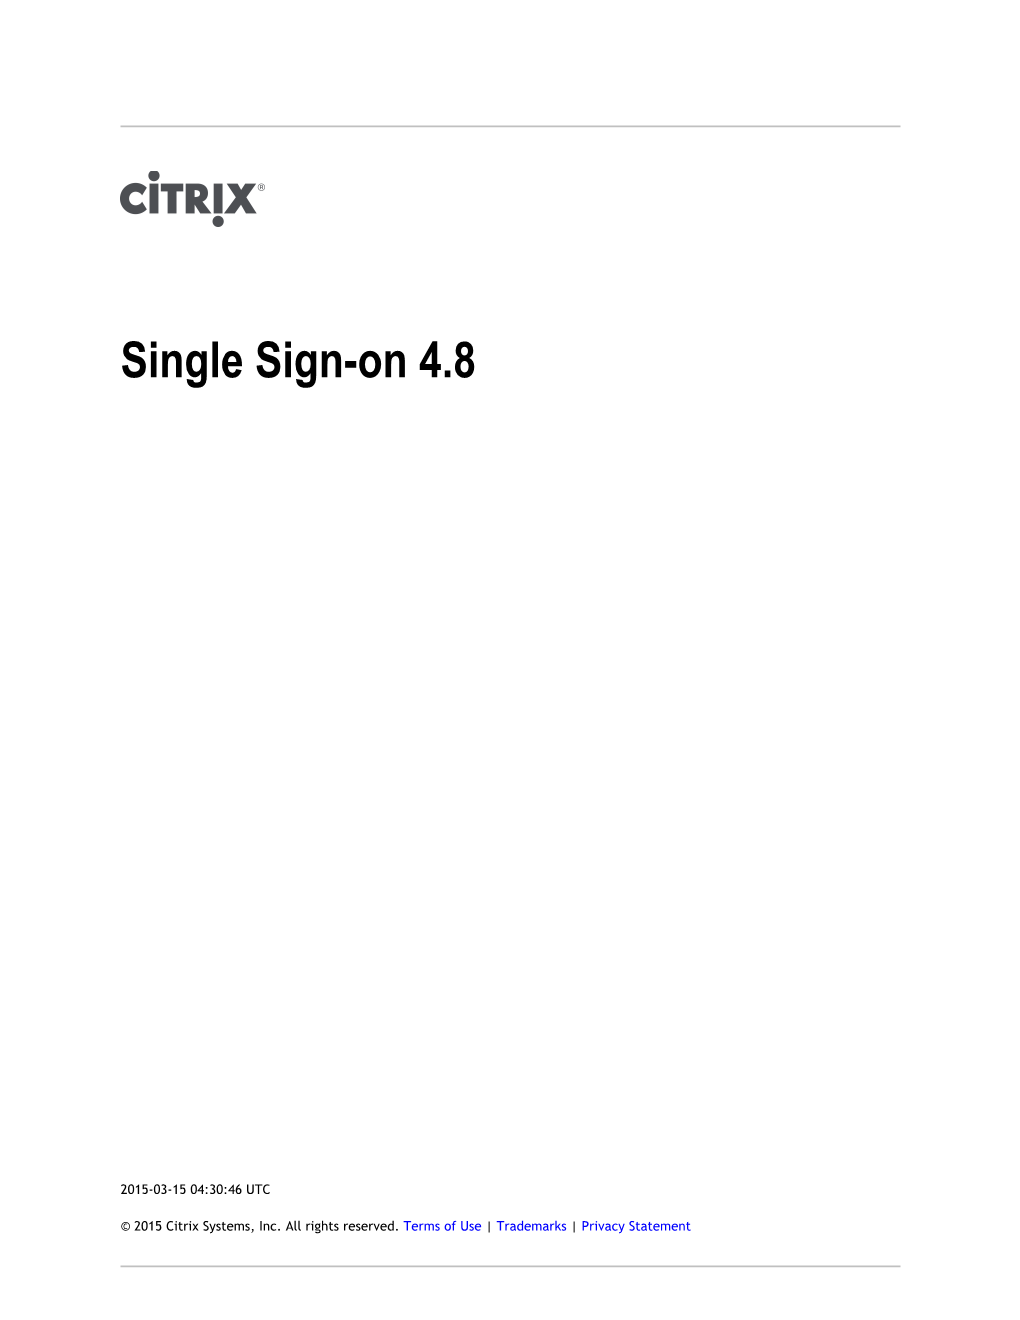 Single Sign-On 4.8